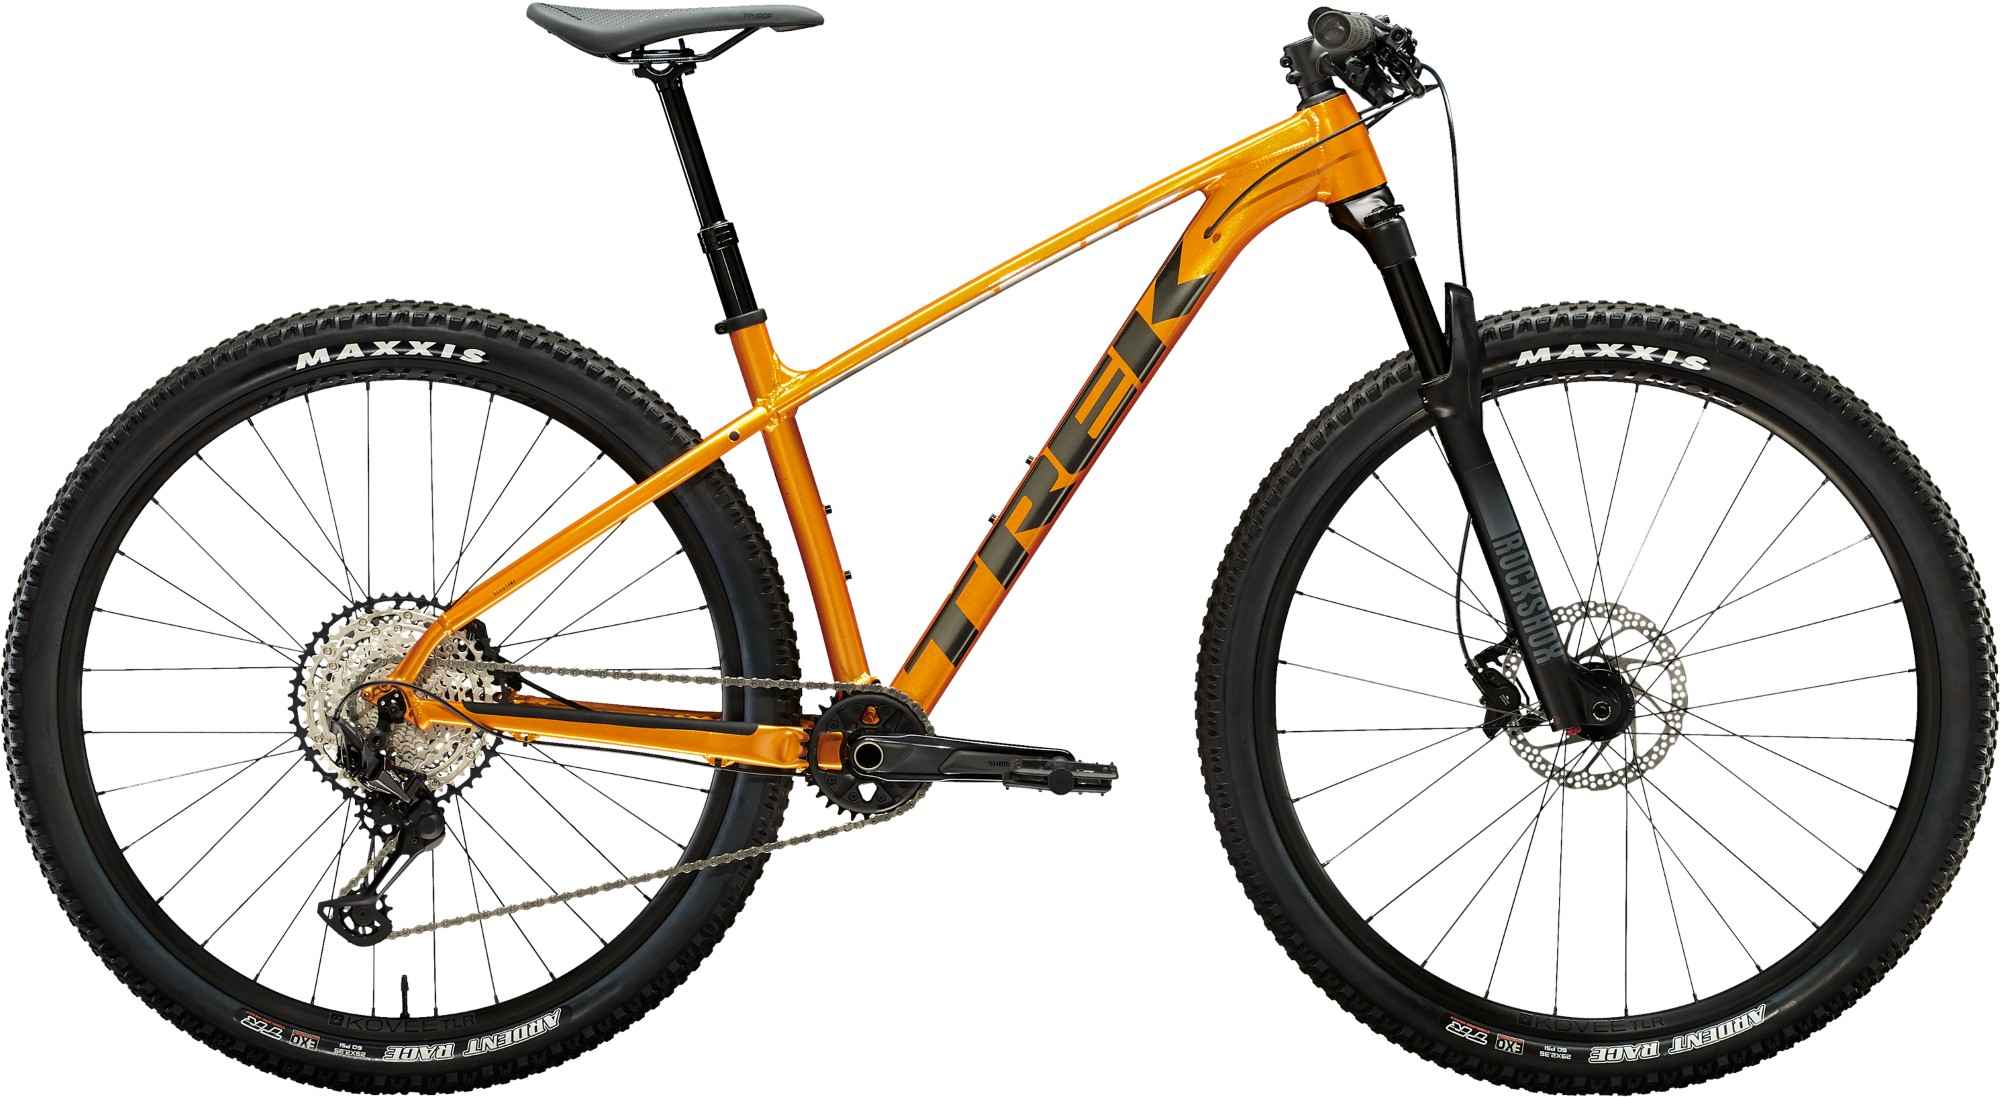 X-CALIBER 9 Mountainbike, Factory Orange